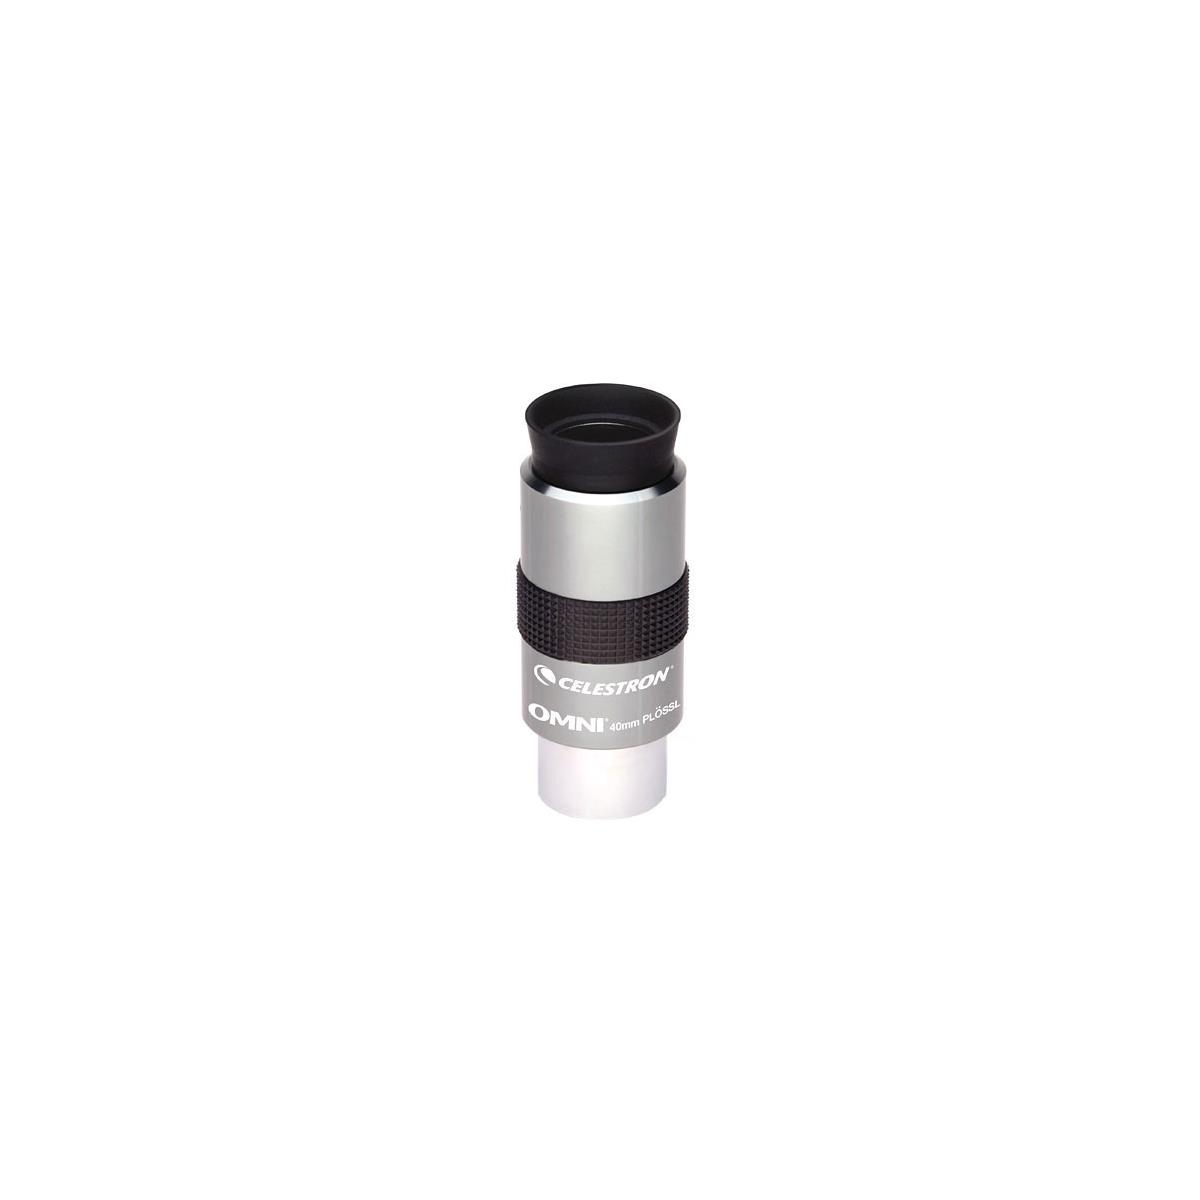 Image of Celestron 40mm Omni Series 1.25 inch Eyepiece